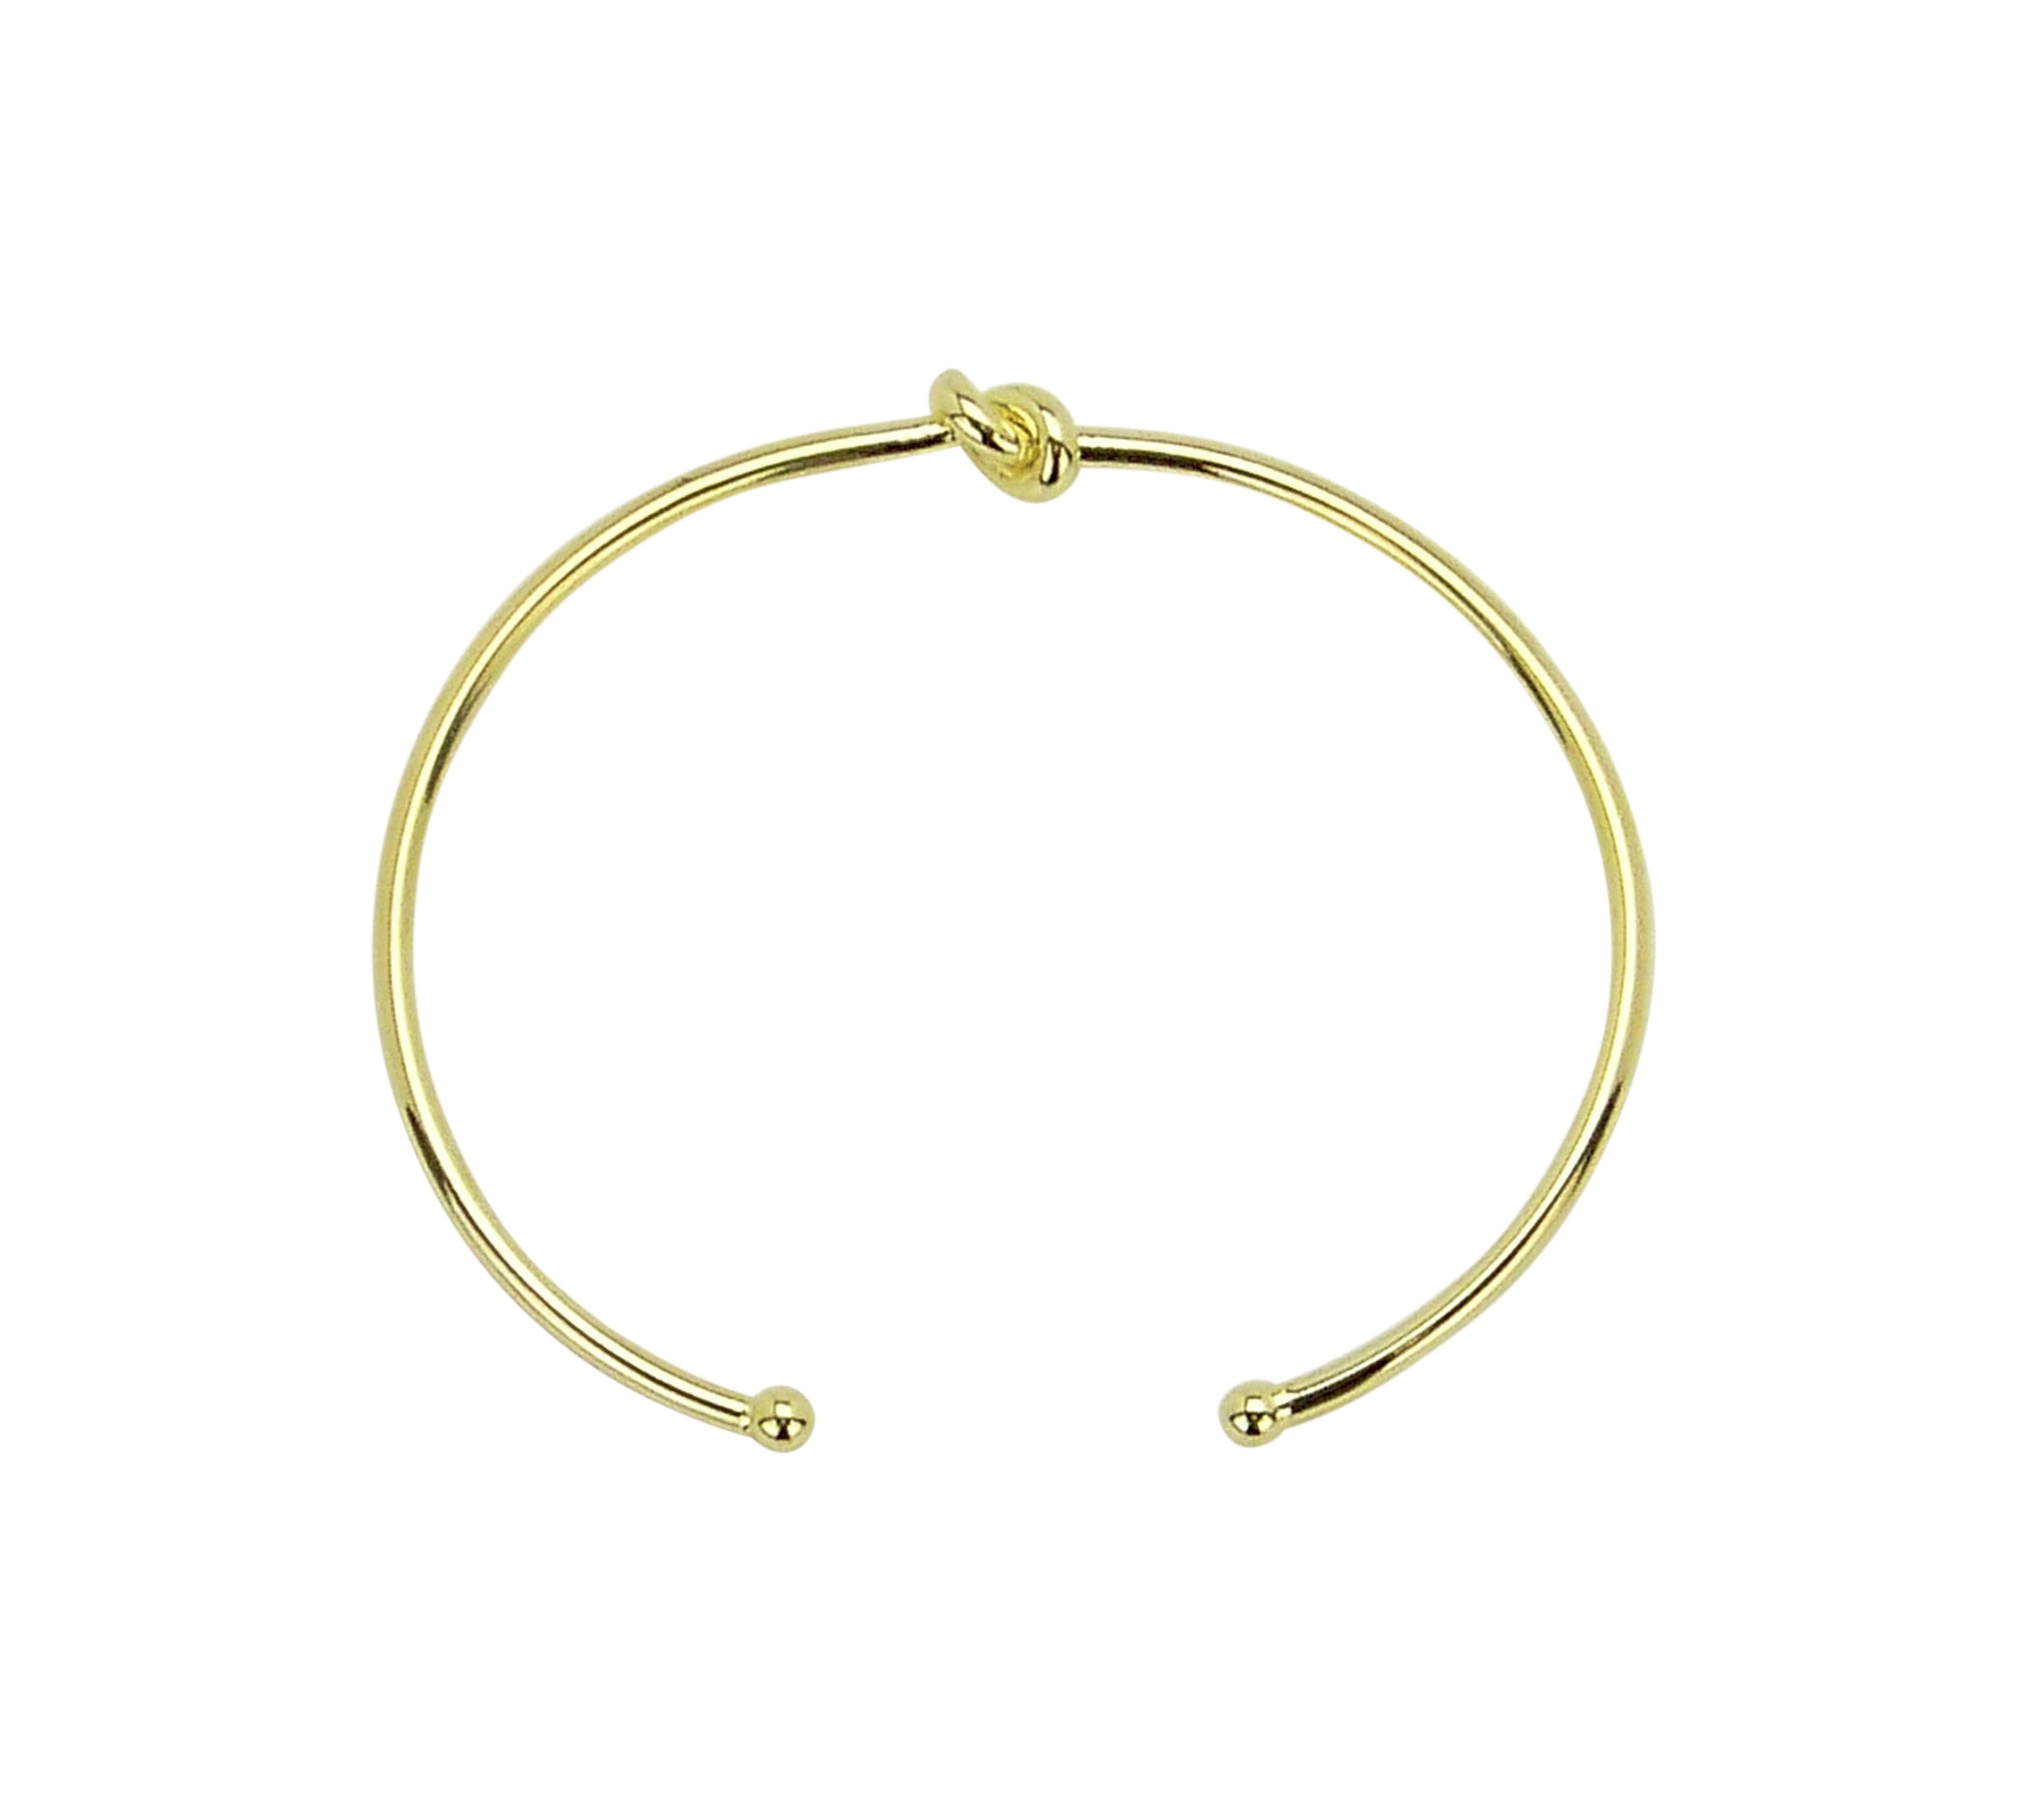 Sheila Fajl Classic Knot Bangle Bracelet in Polished Gold Plated